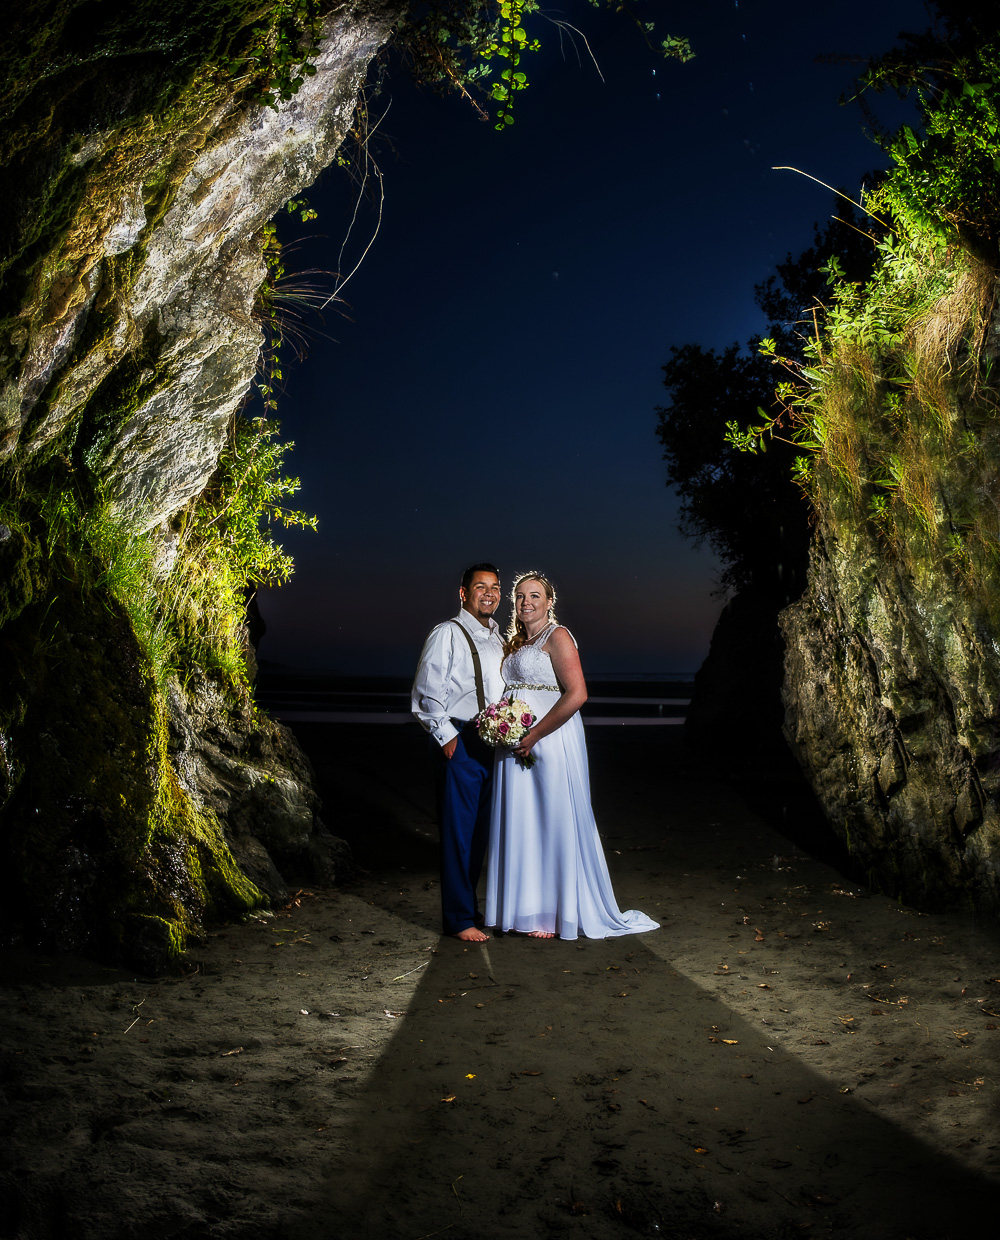  Matt and Laura's Trinidad Intimate Beach Wedding at Moonstone Beach  